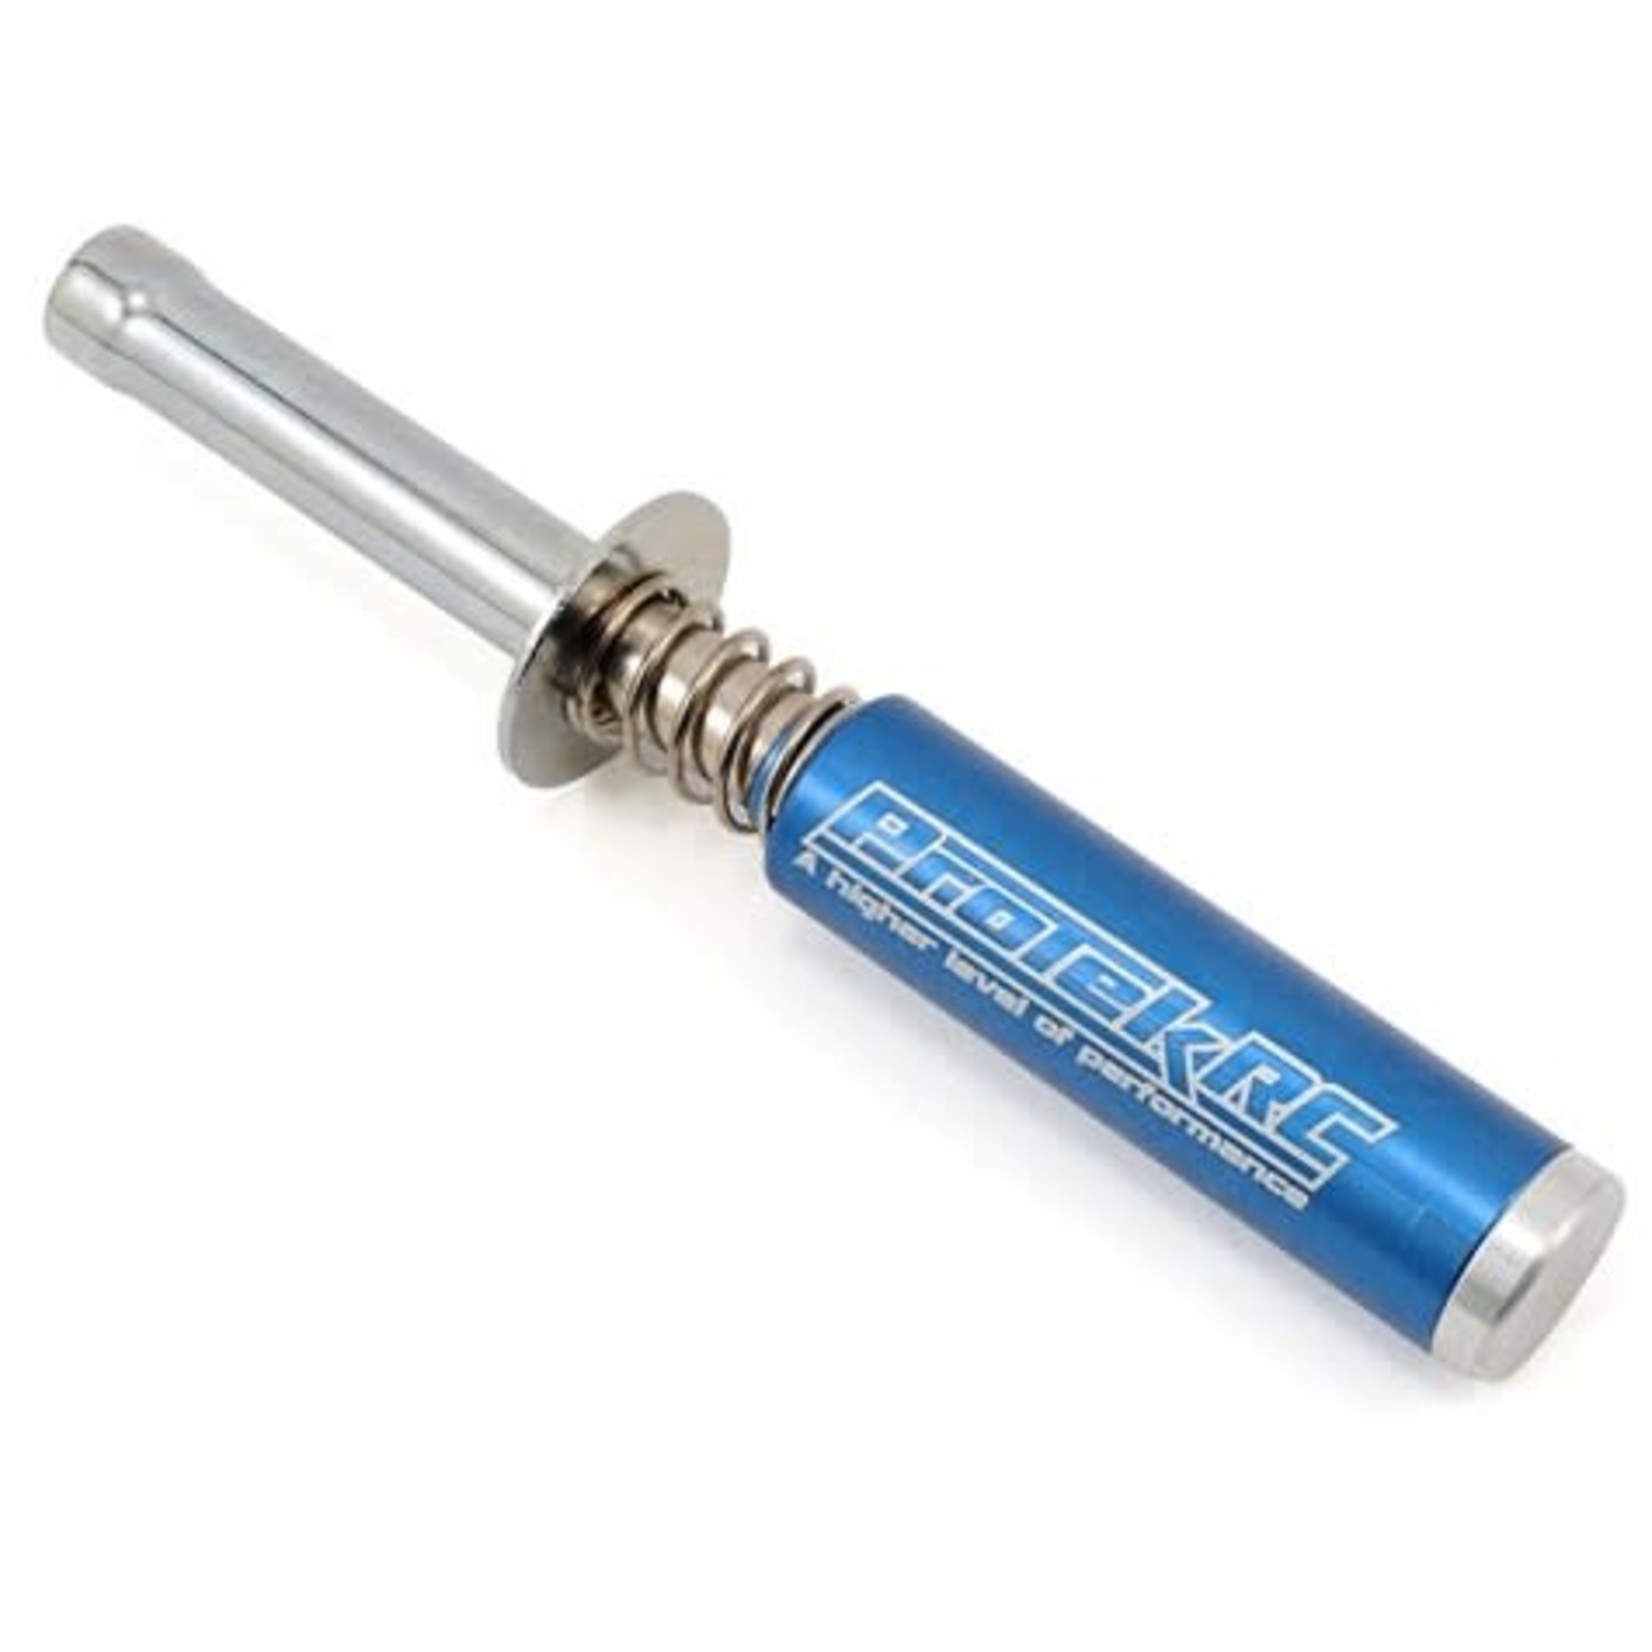 ProTek RC ProTek RC "SureStart" Pencil Style Glow Igniter (AA Battery) #PTK-7604